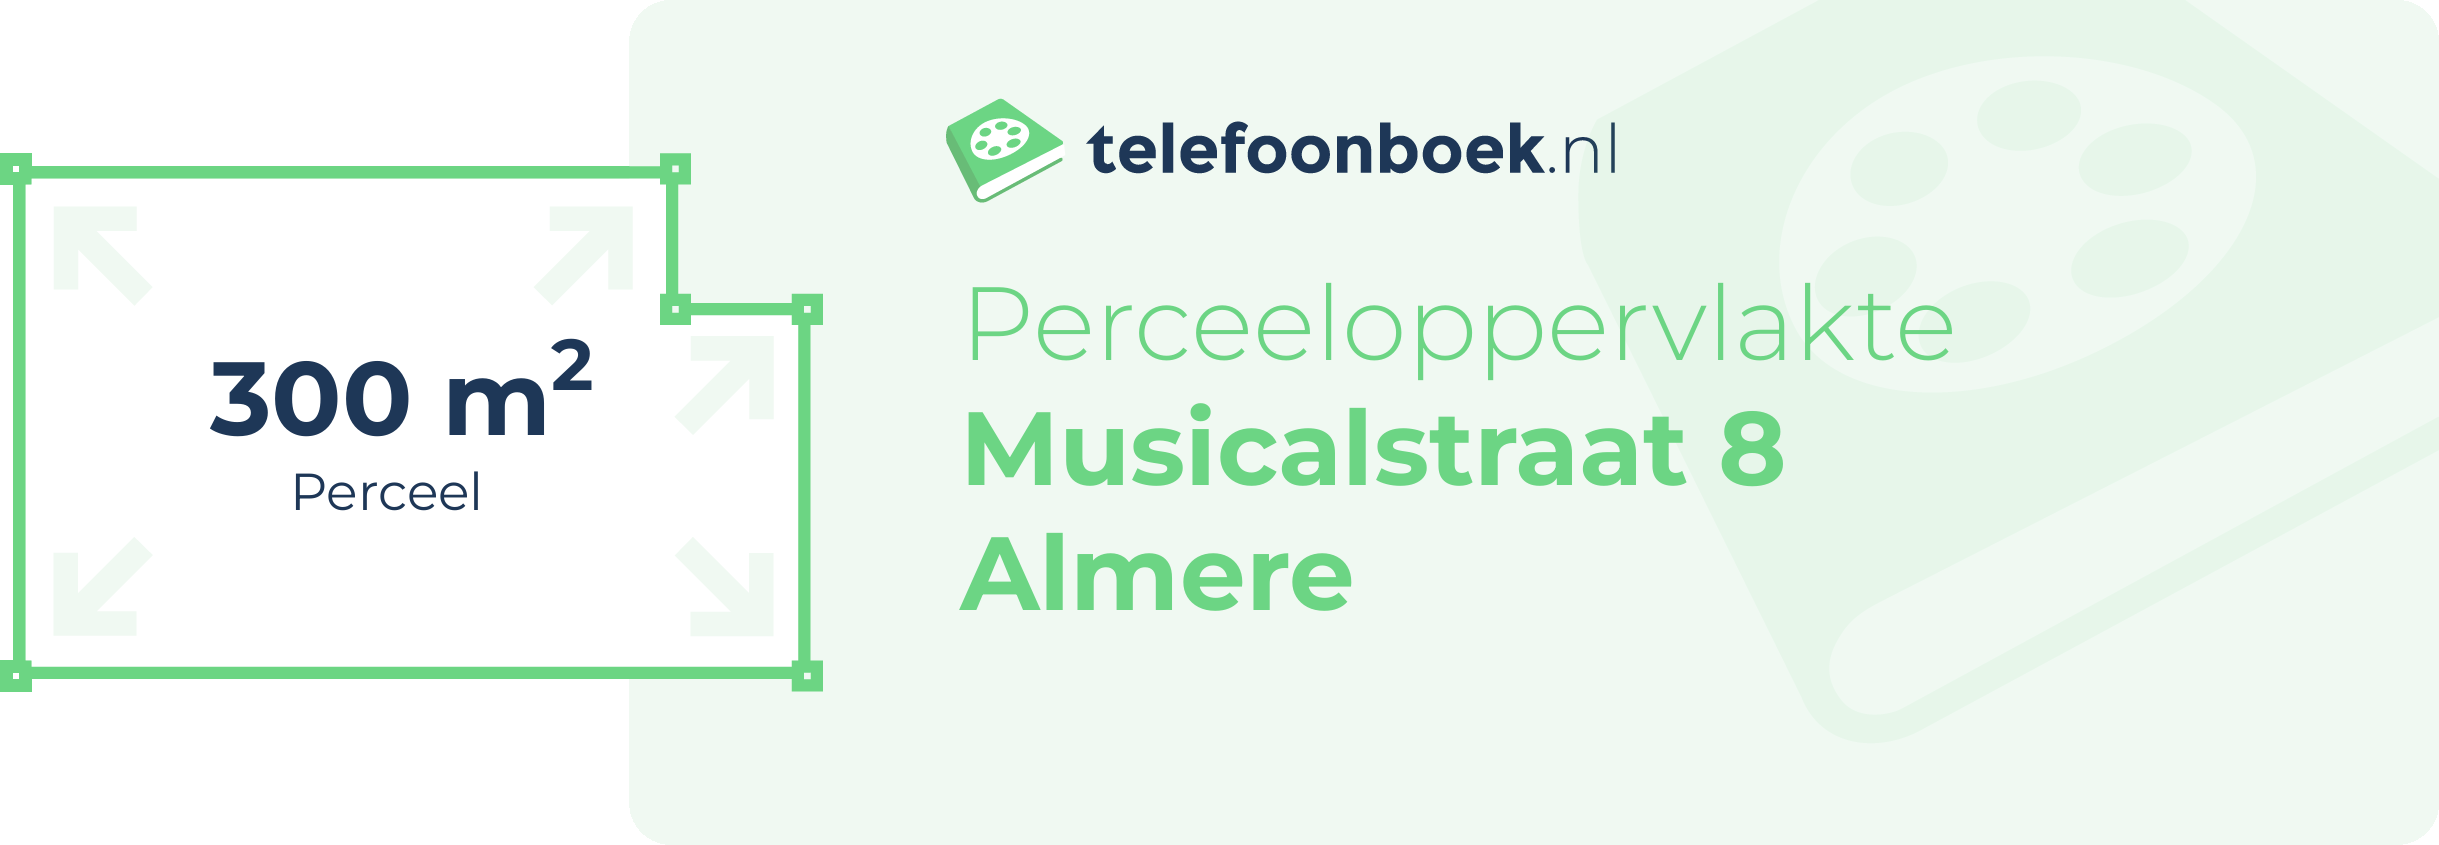 Perceeloppervlakte Musicalstraat 8 Almere